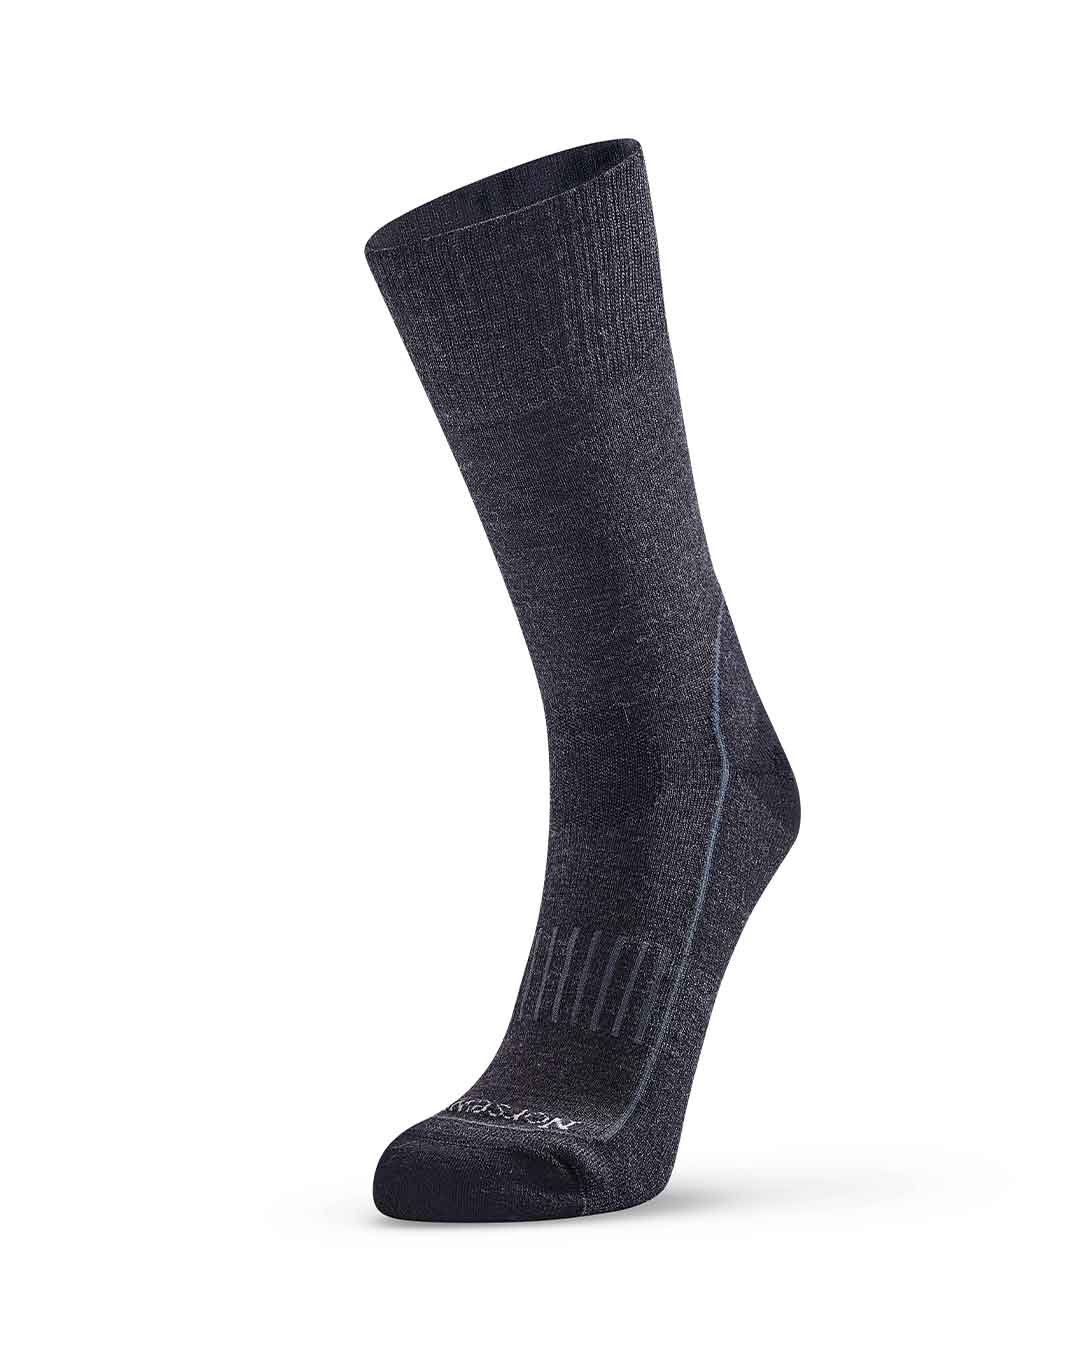 Adventurer Micro Crew Sock - Charcoal with Dark Grey trim